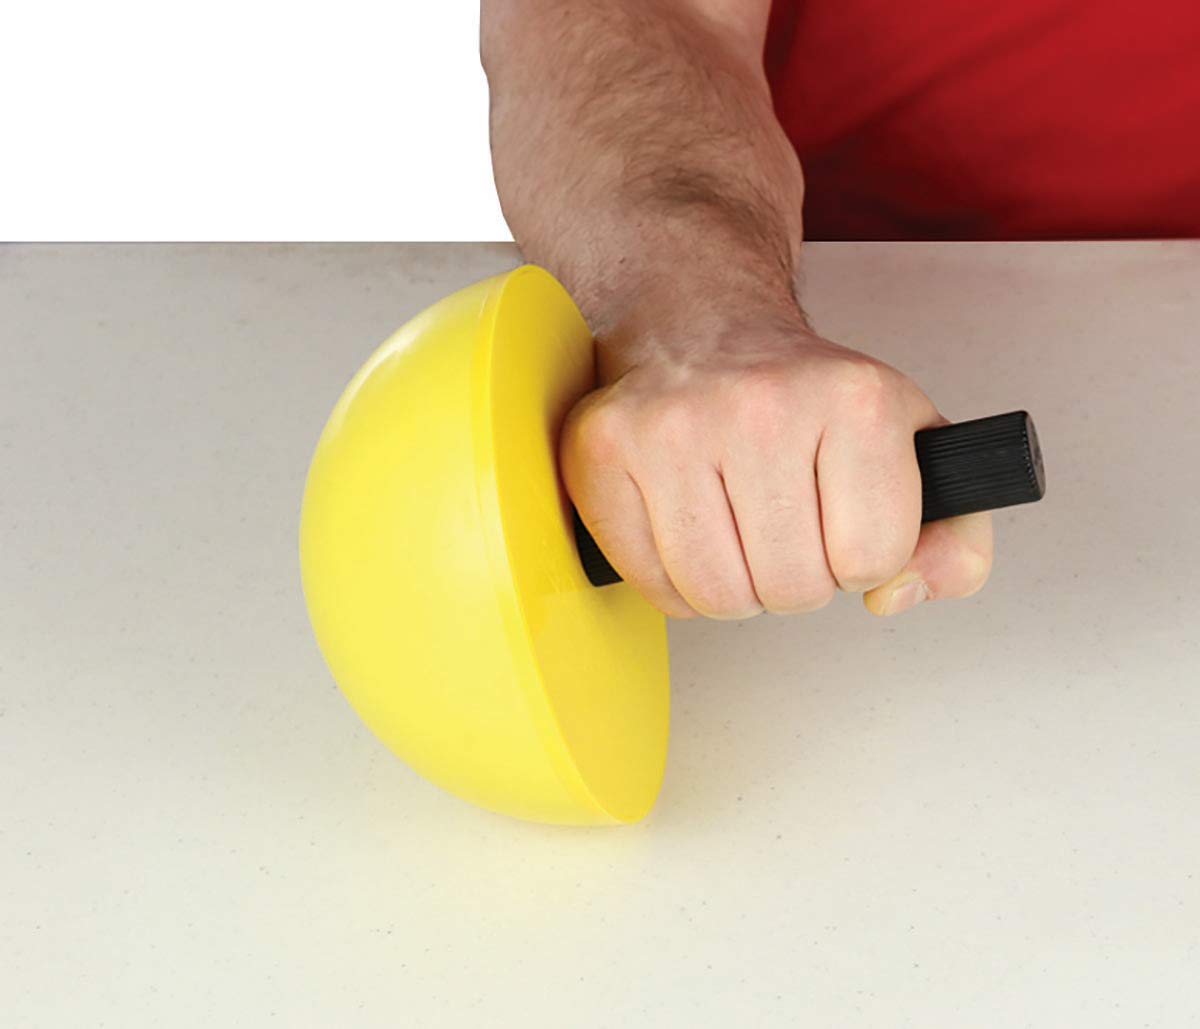 CanDo Wrist - Forearm Exerciser Set: 3 Semi-Spheres, 3 Handles